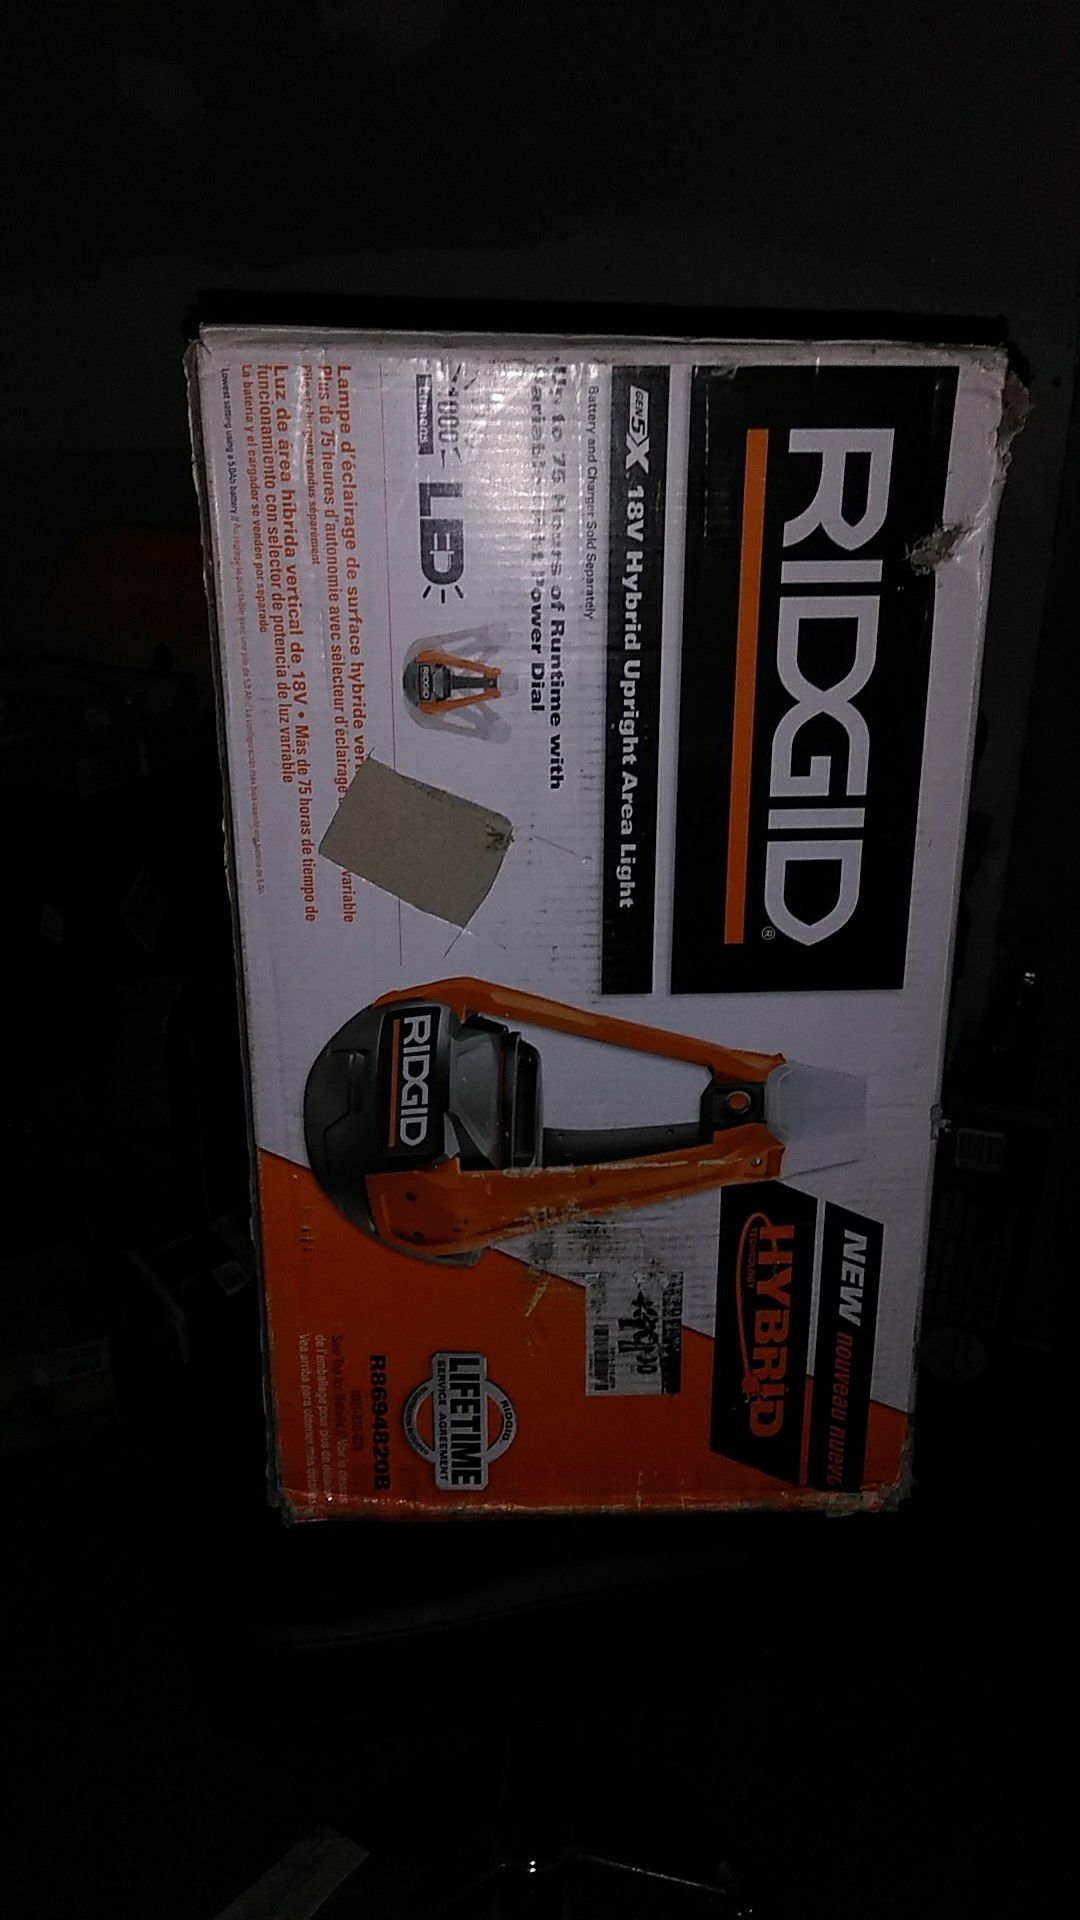 Ridgid 18-Volt Hybrid Upright Area Light (Tool Only)Bnib $60